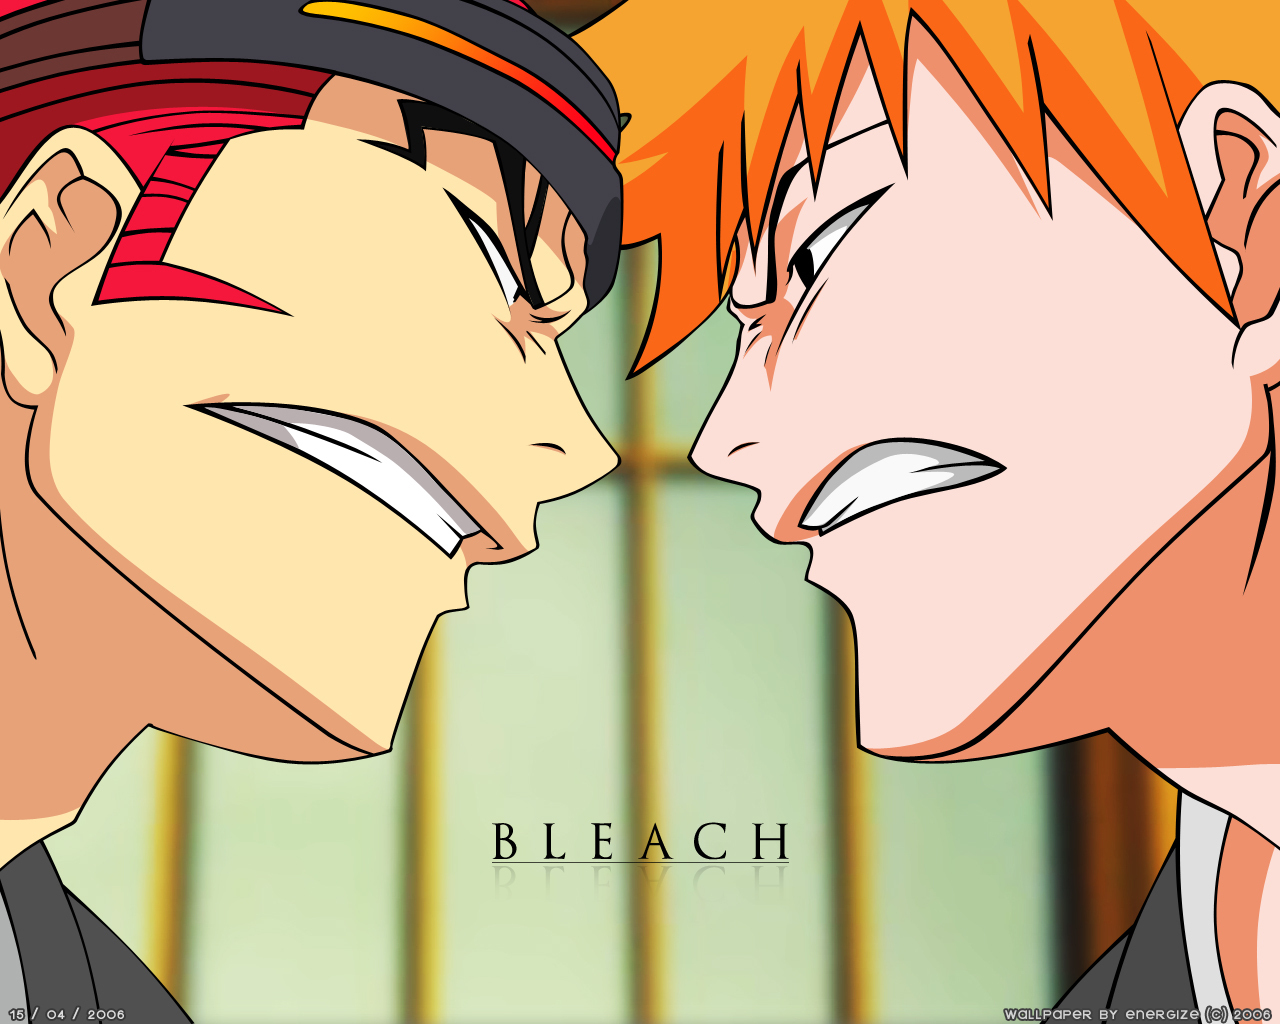 Bleach - Bleach Anime Wallpaper (6903631) - Fanpop - Page 8